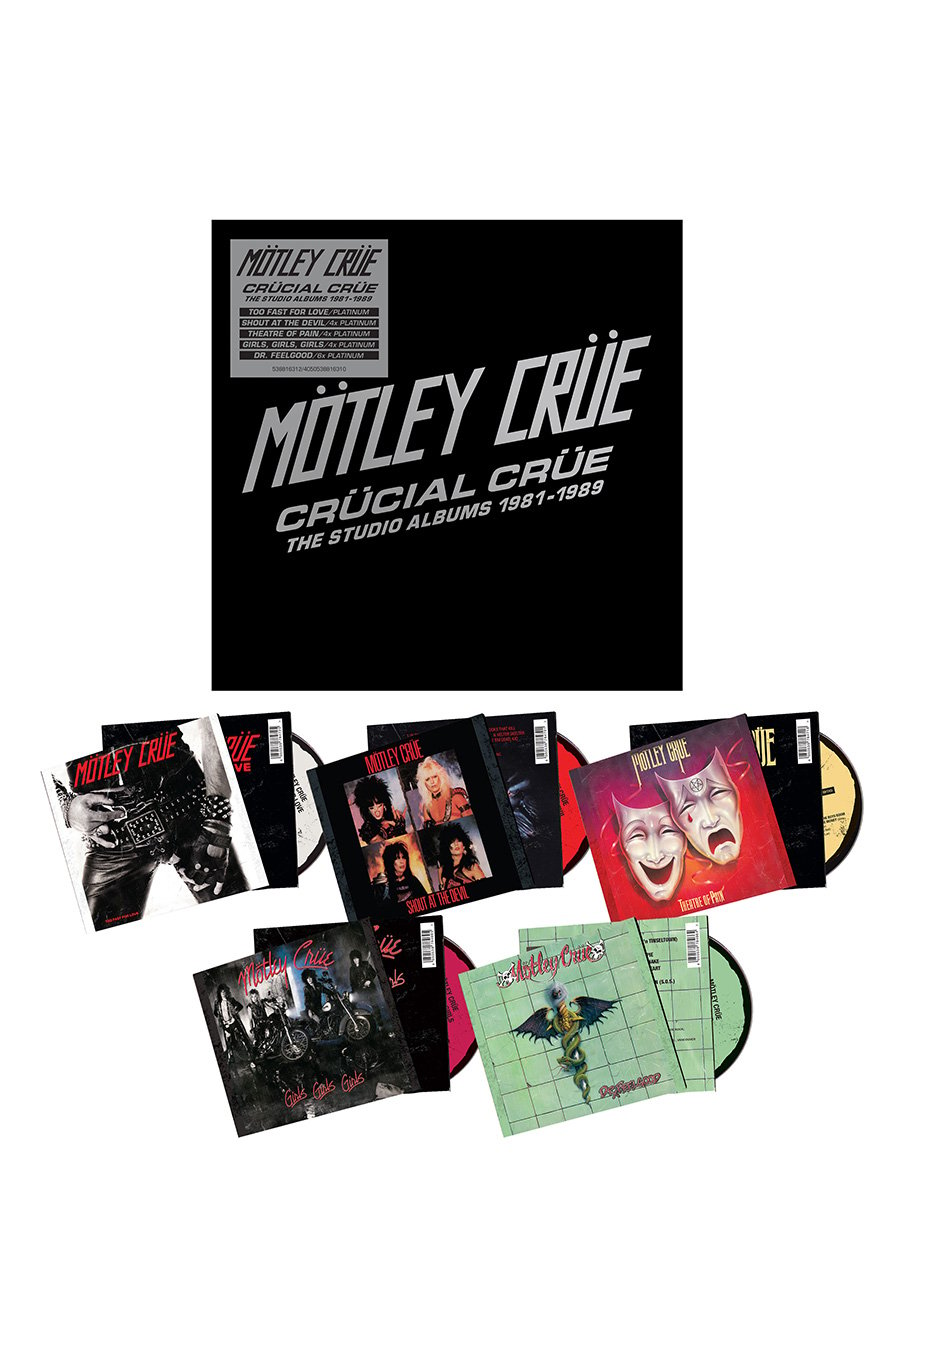 Mötley Crüe - Crücial Crüe-The Studio Albums 1981-1989 - CD Boxset